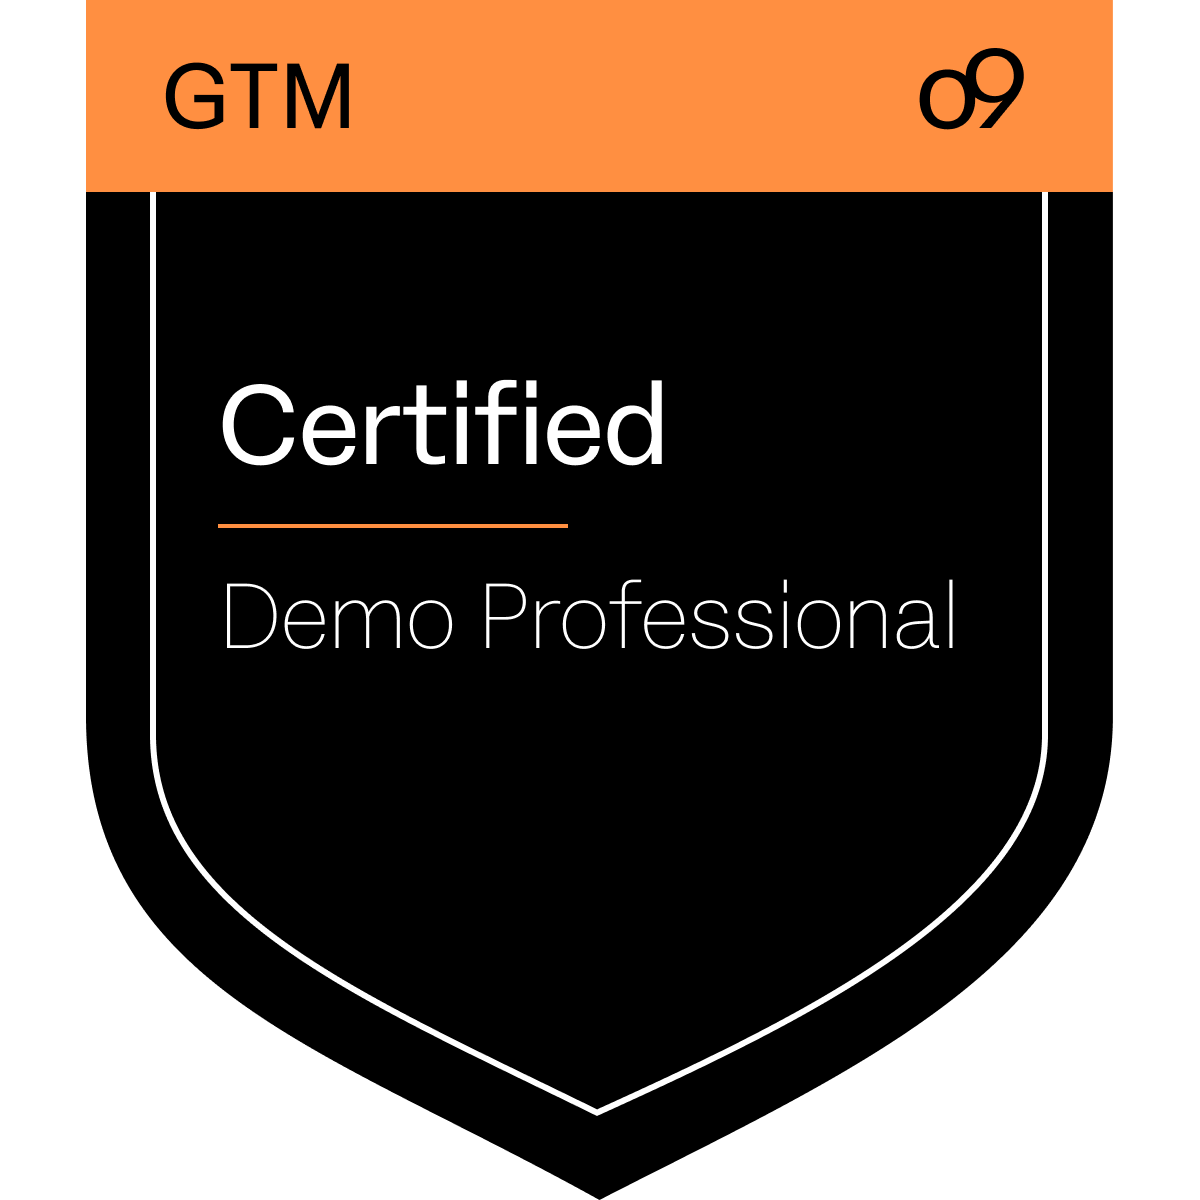 O9 badge gtm